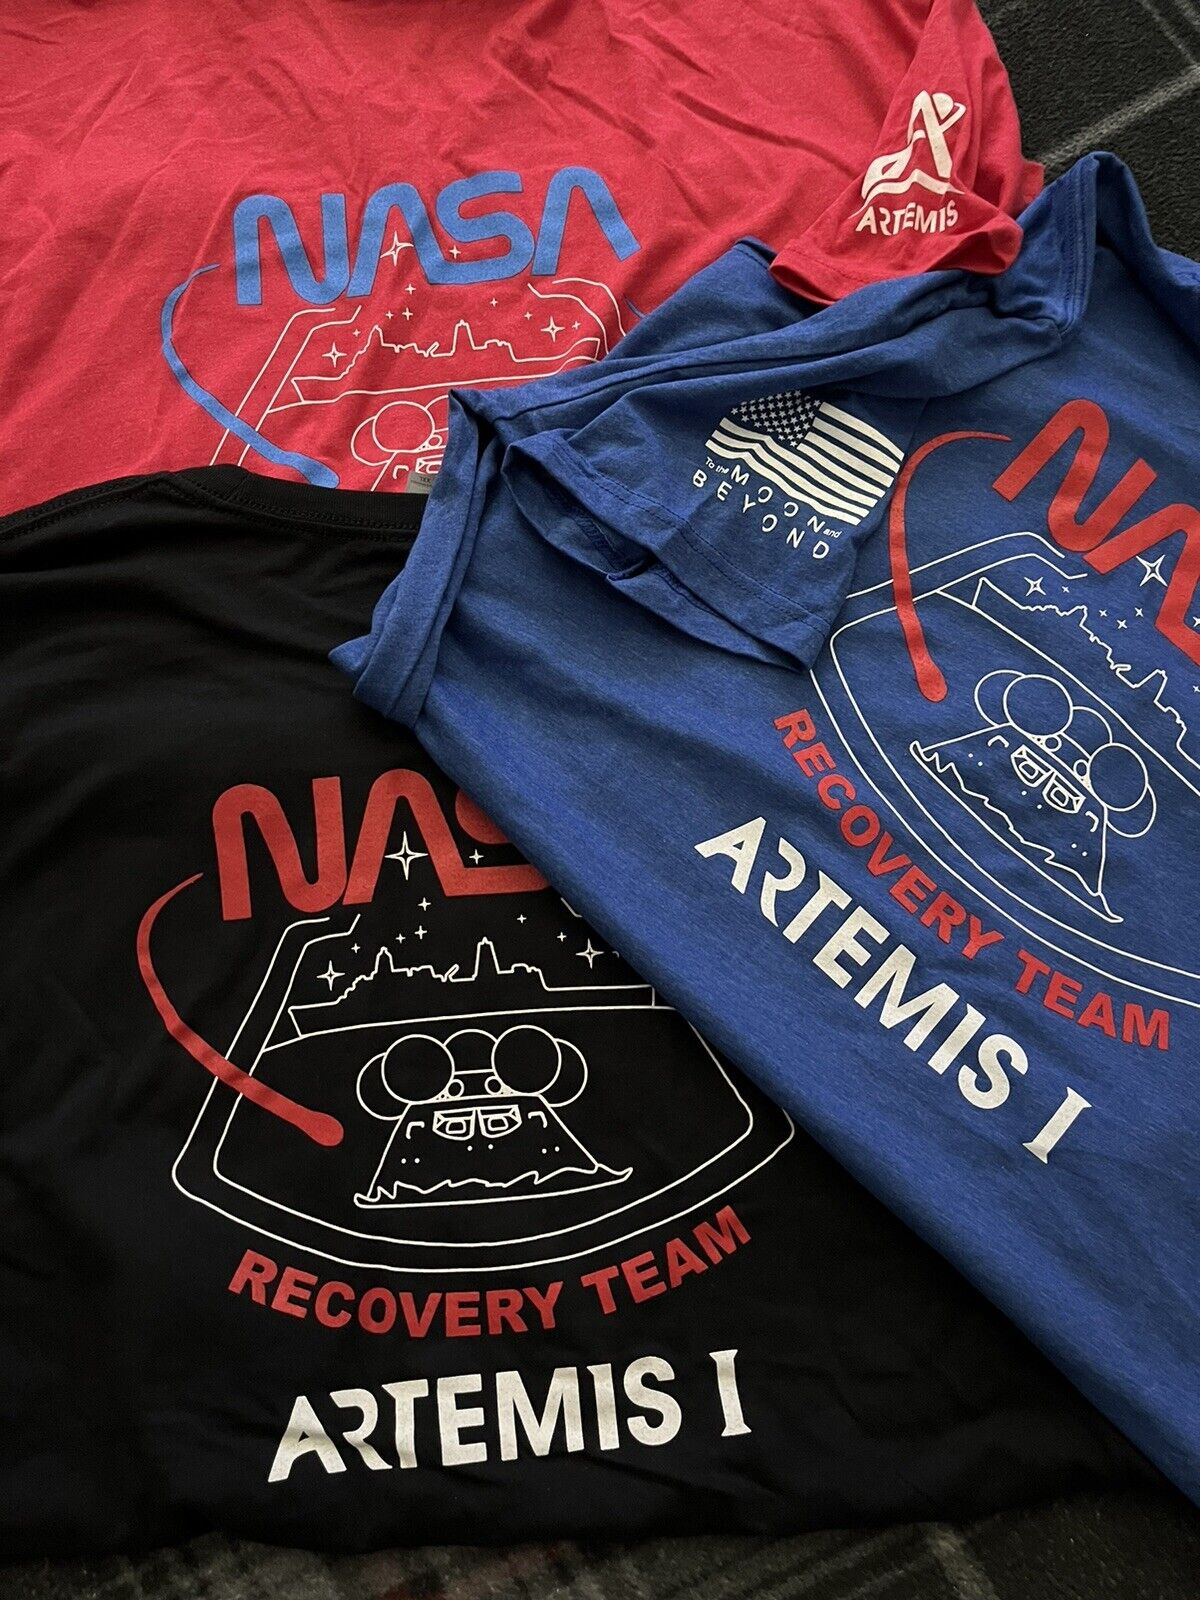 NASA Artemis XXL T-shirt Recovery Team Lot Of 3